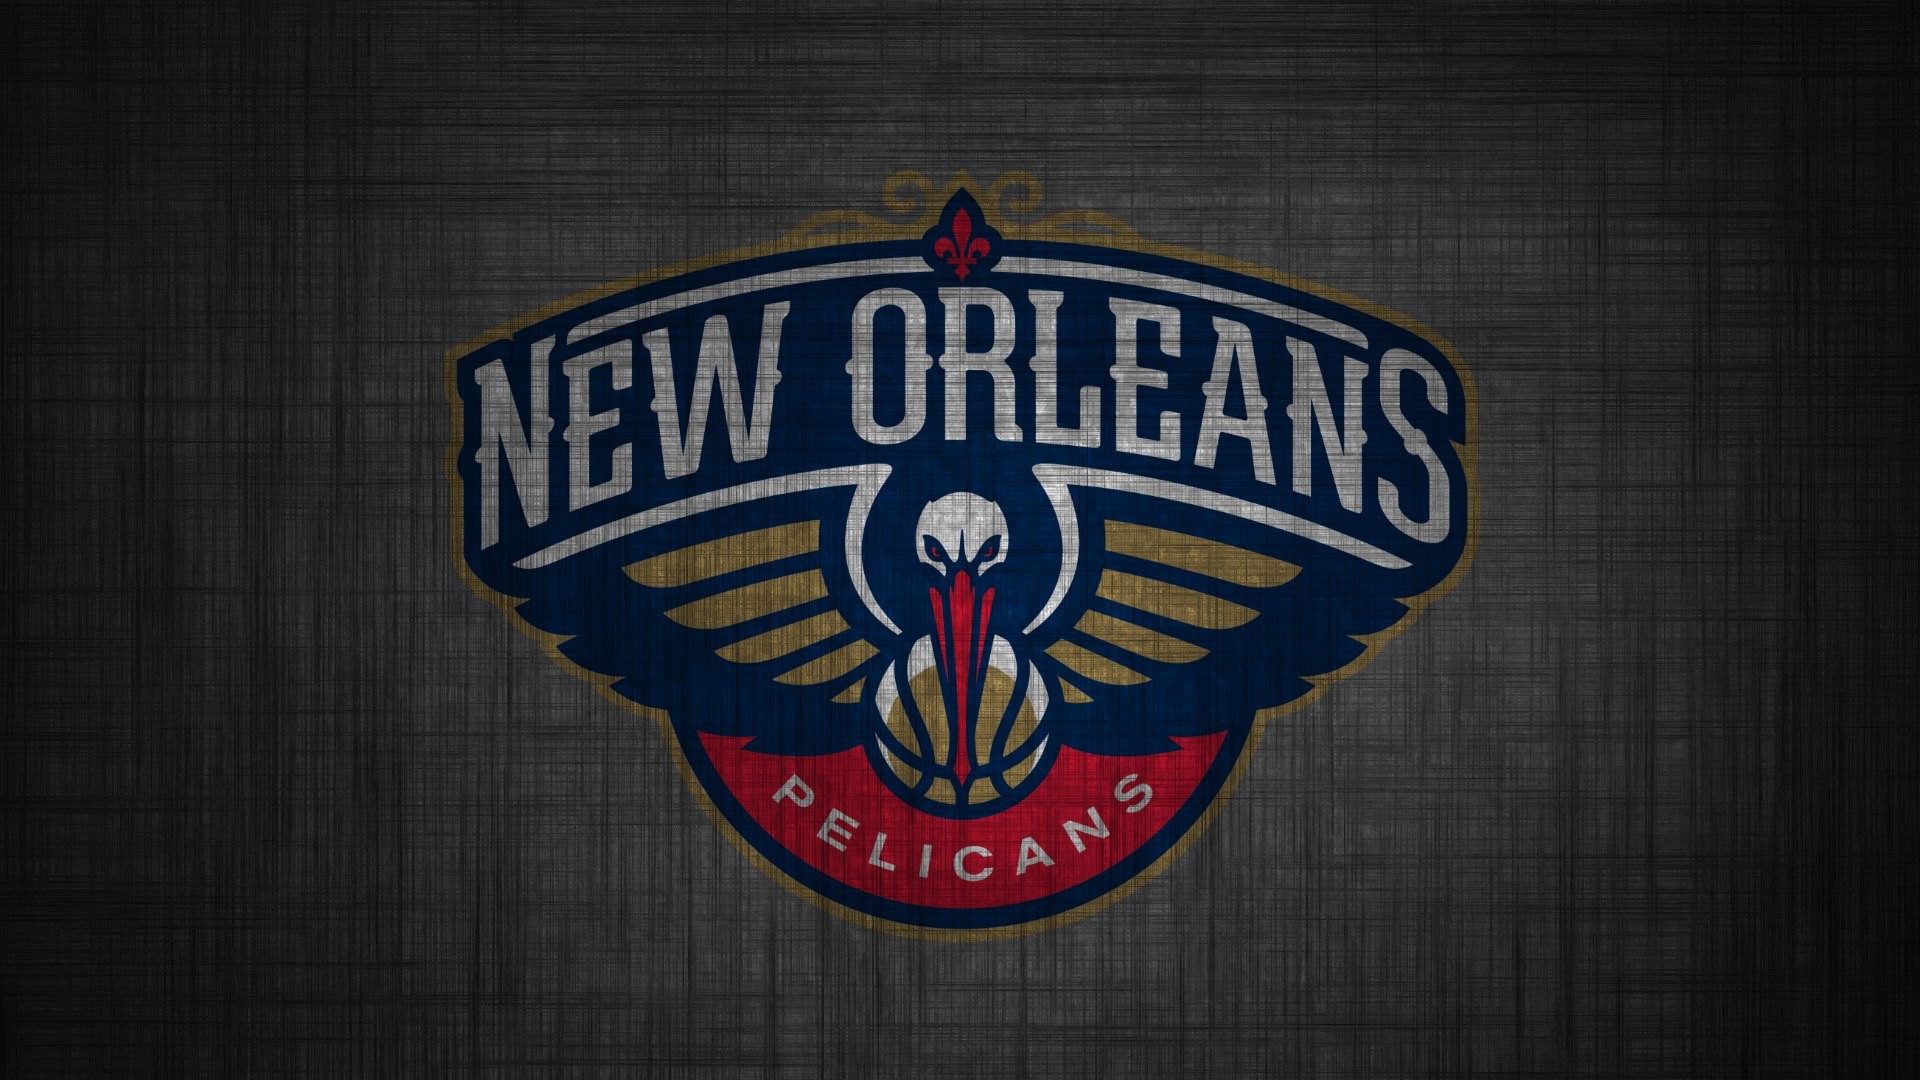 1920x1080 New Orleans Pelicans Wallpaper #1 | New Orleans Hornets/Pelicans